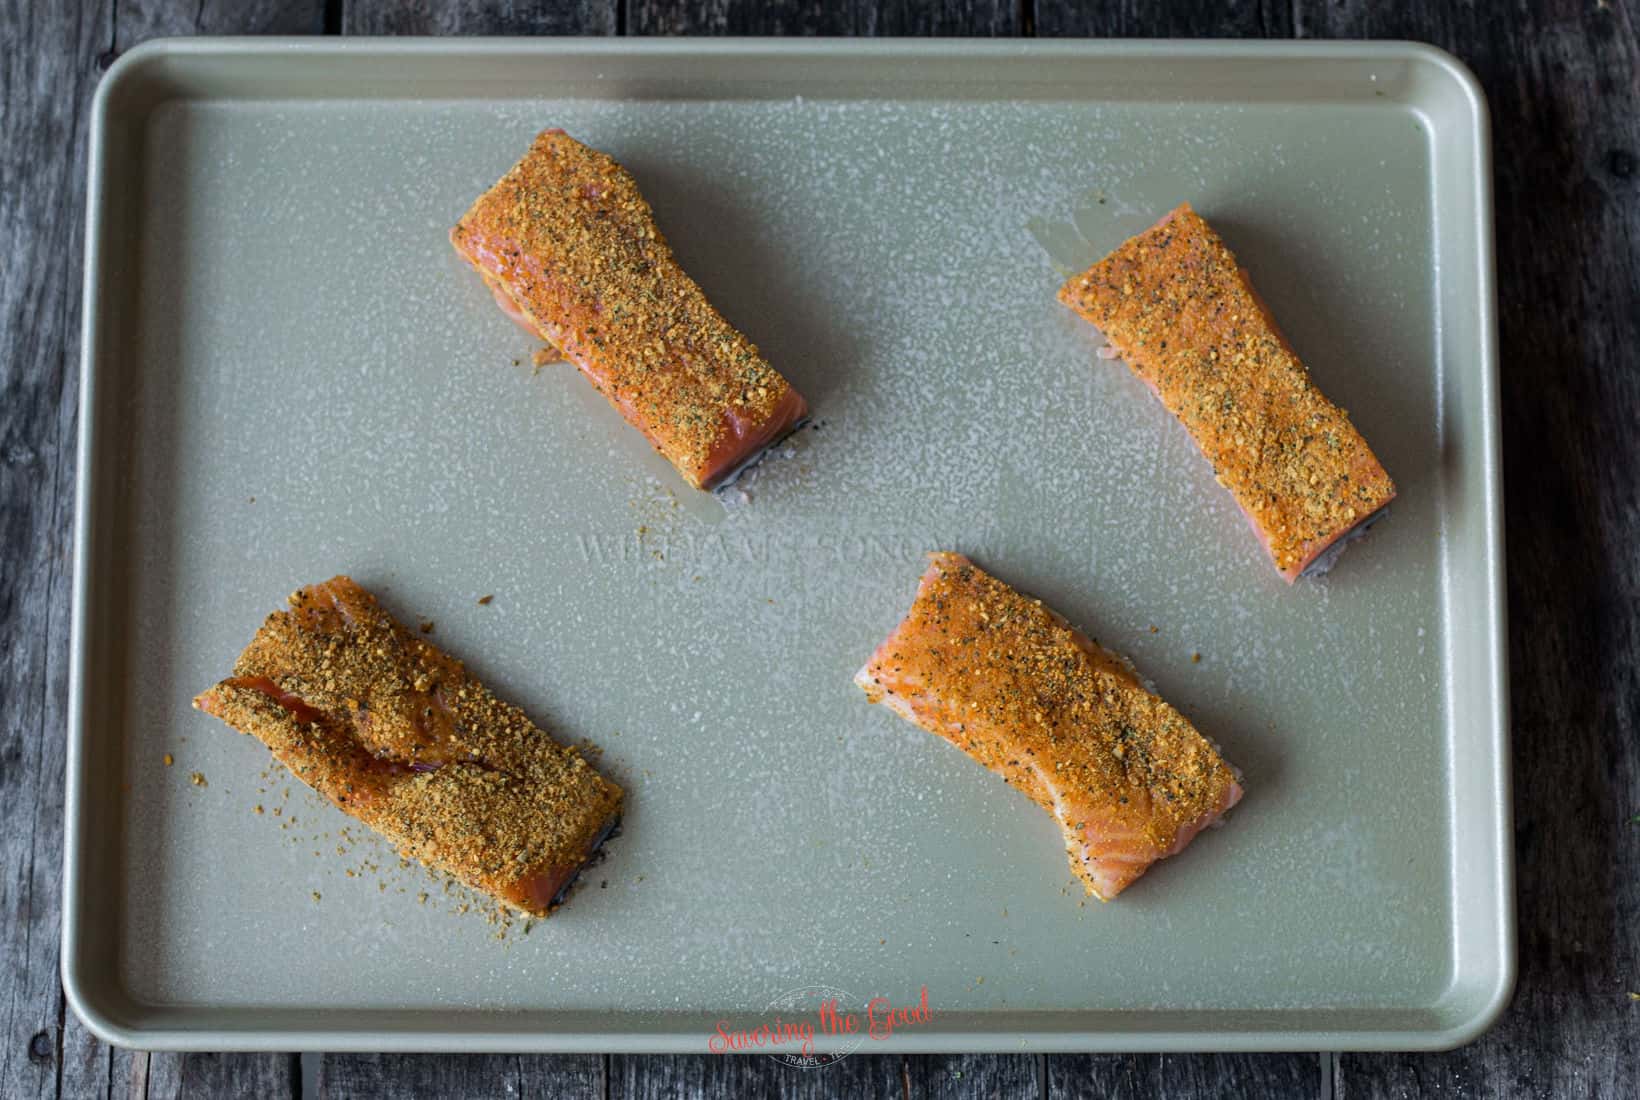 seasoned salmon pieces on a sheet pan.